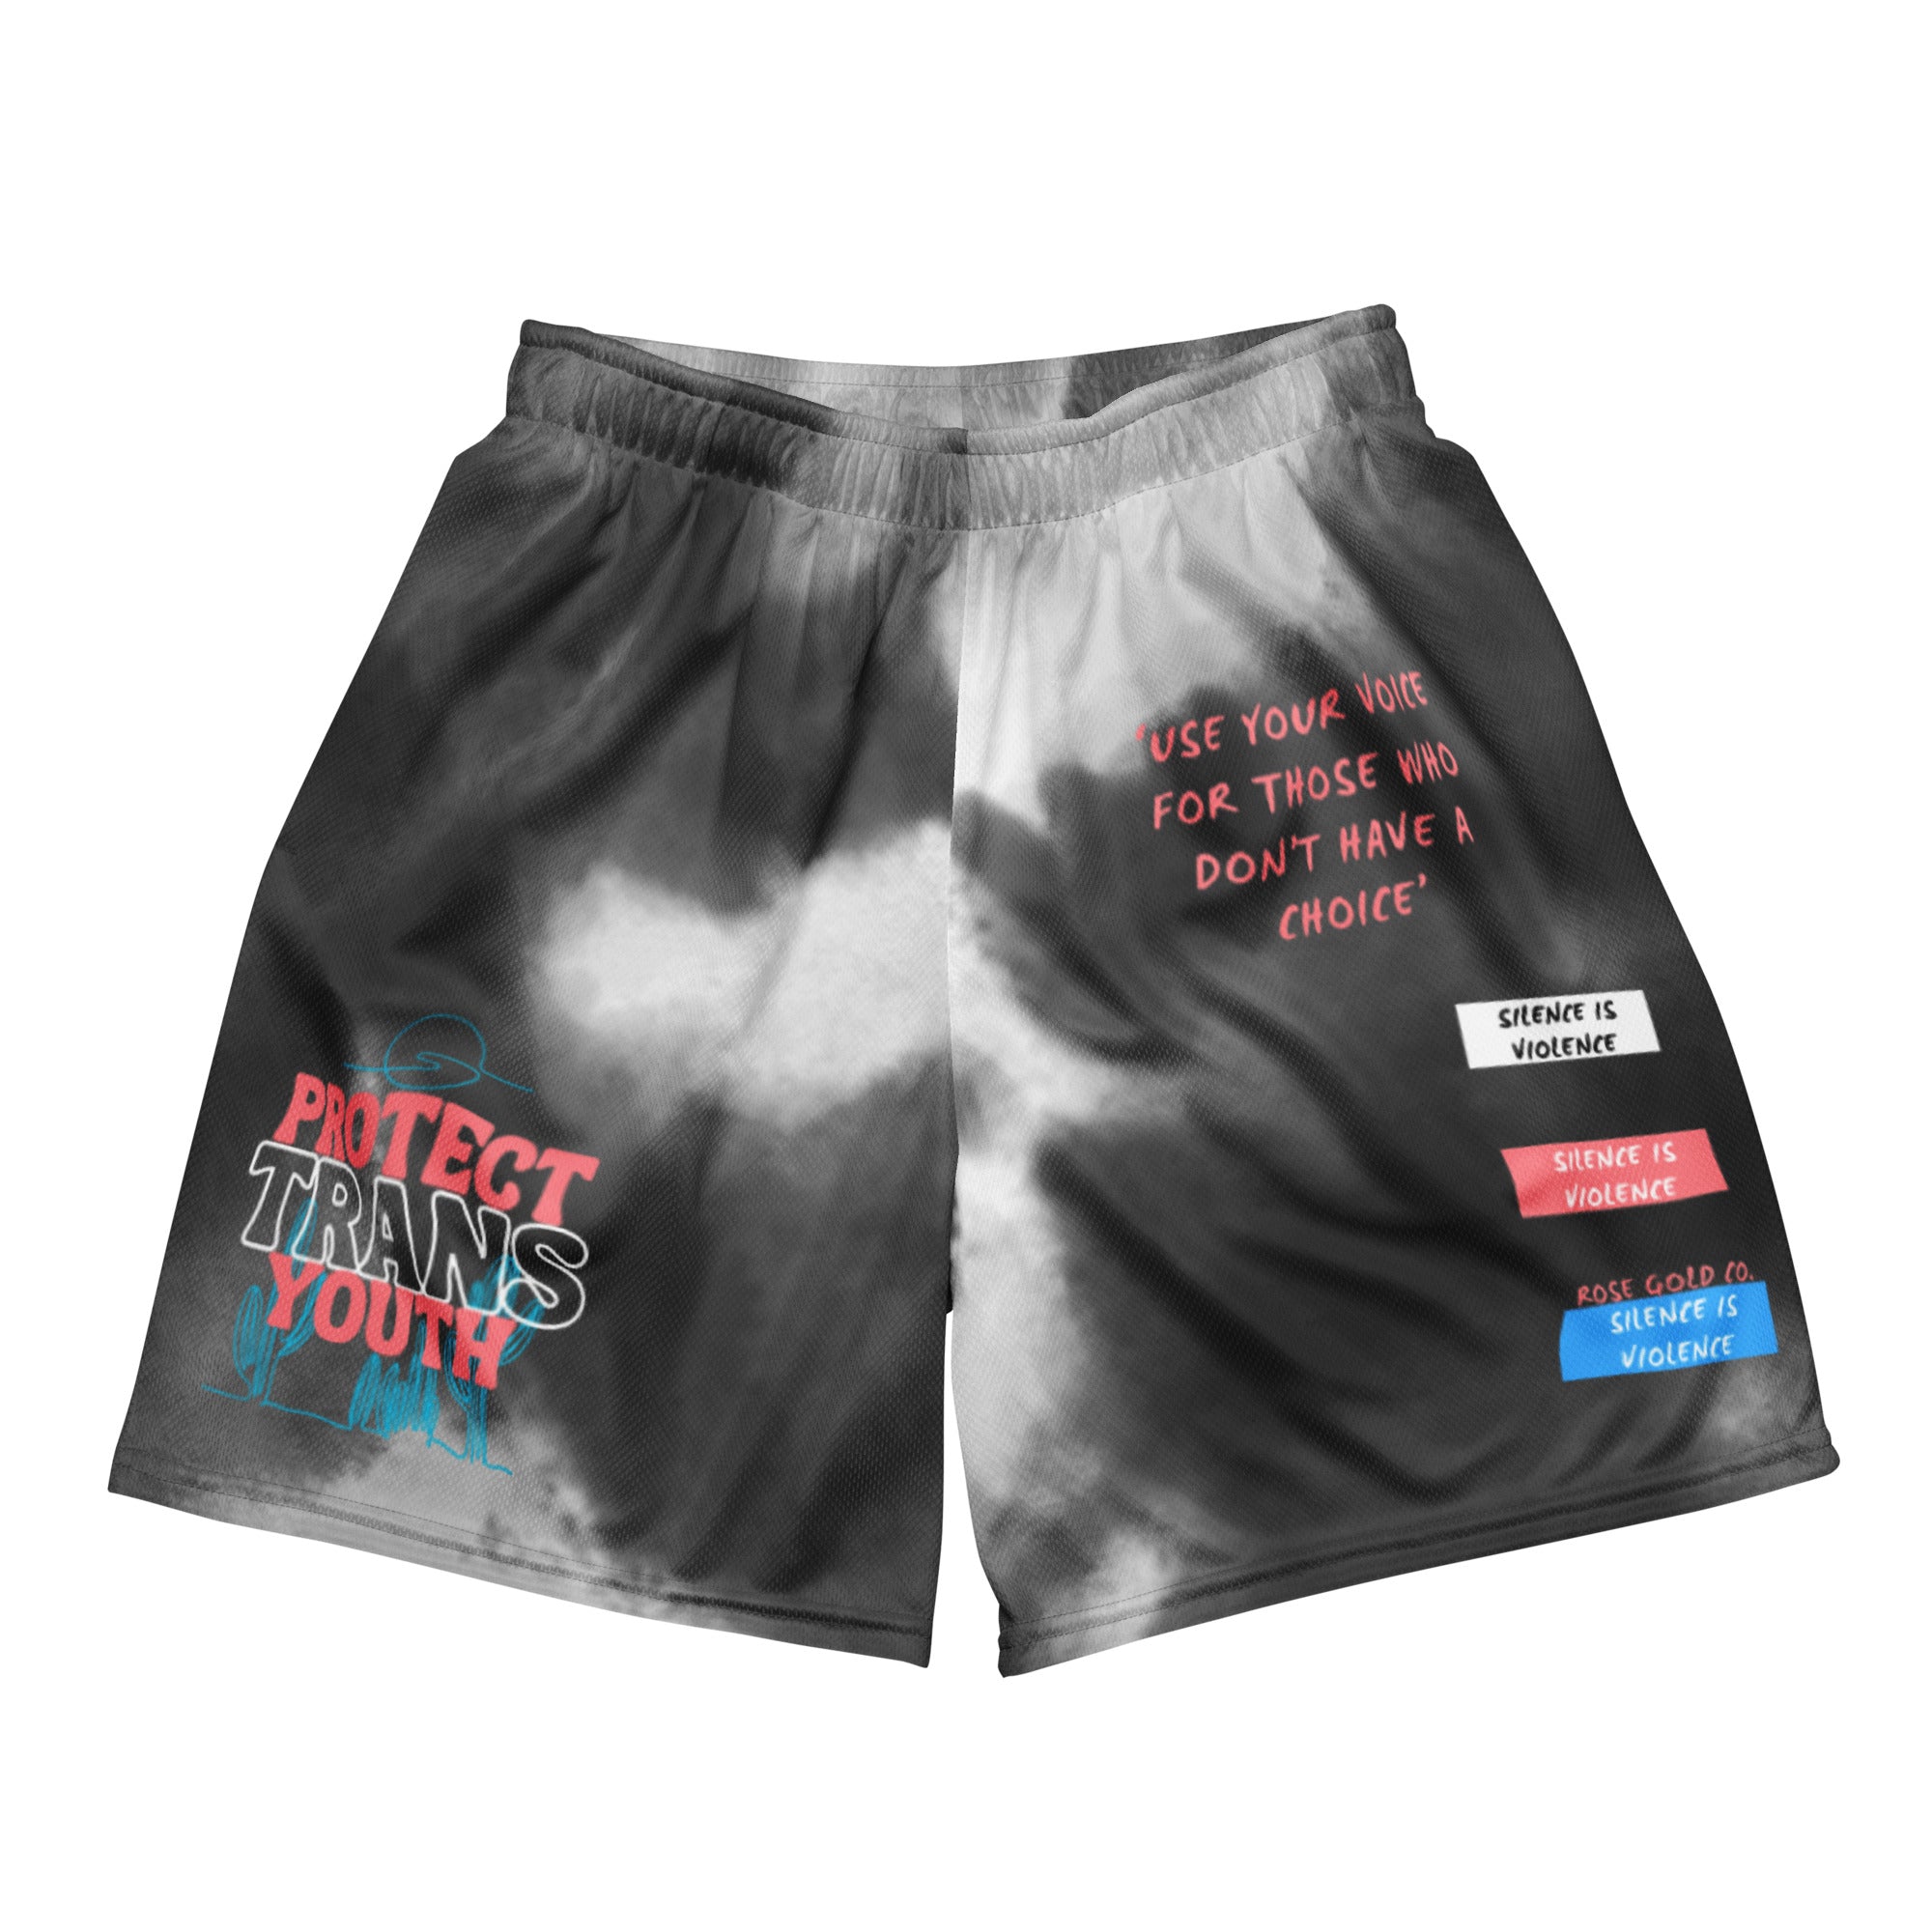 Protect Trans Youth Unisex Shorts